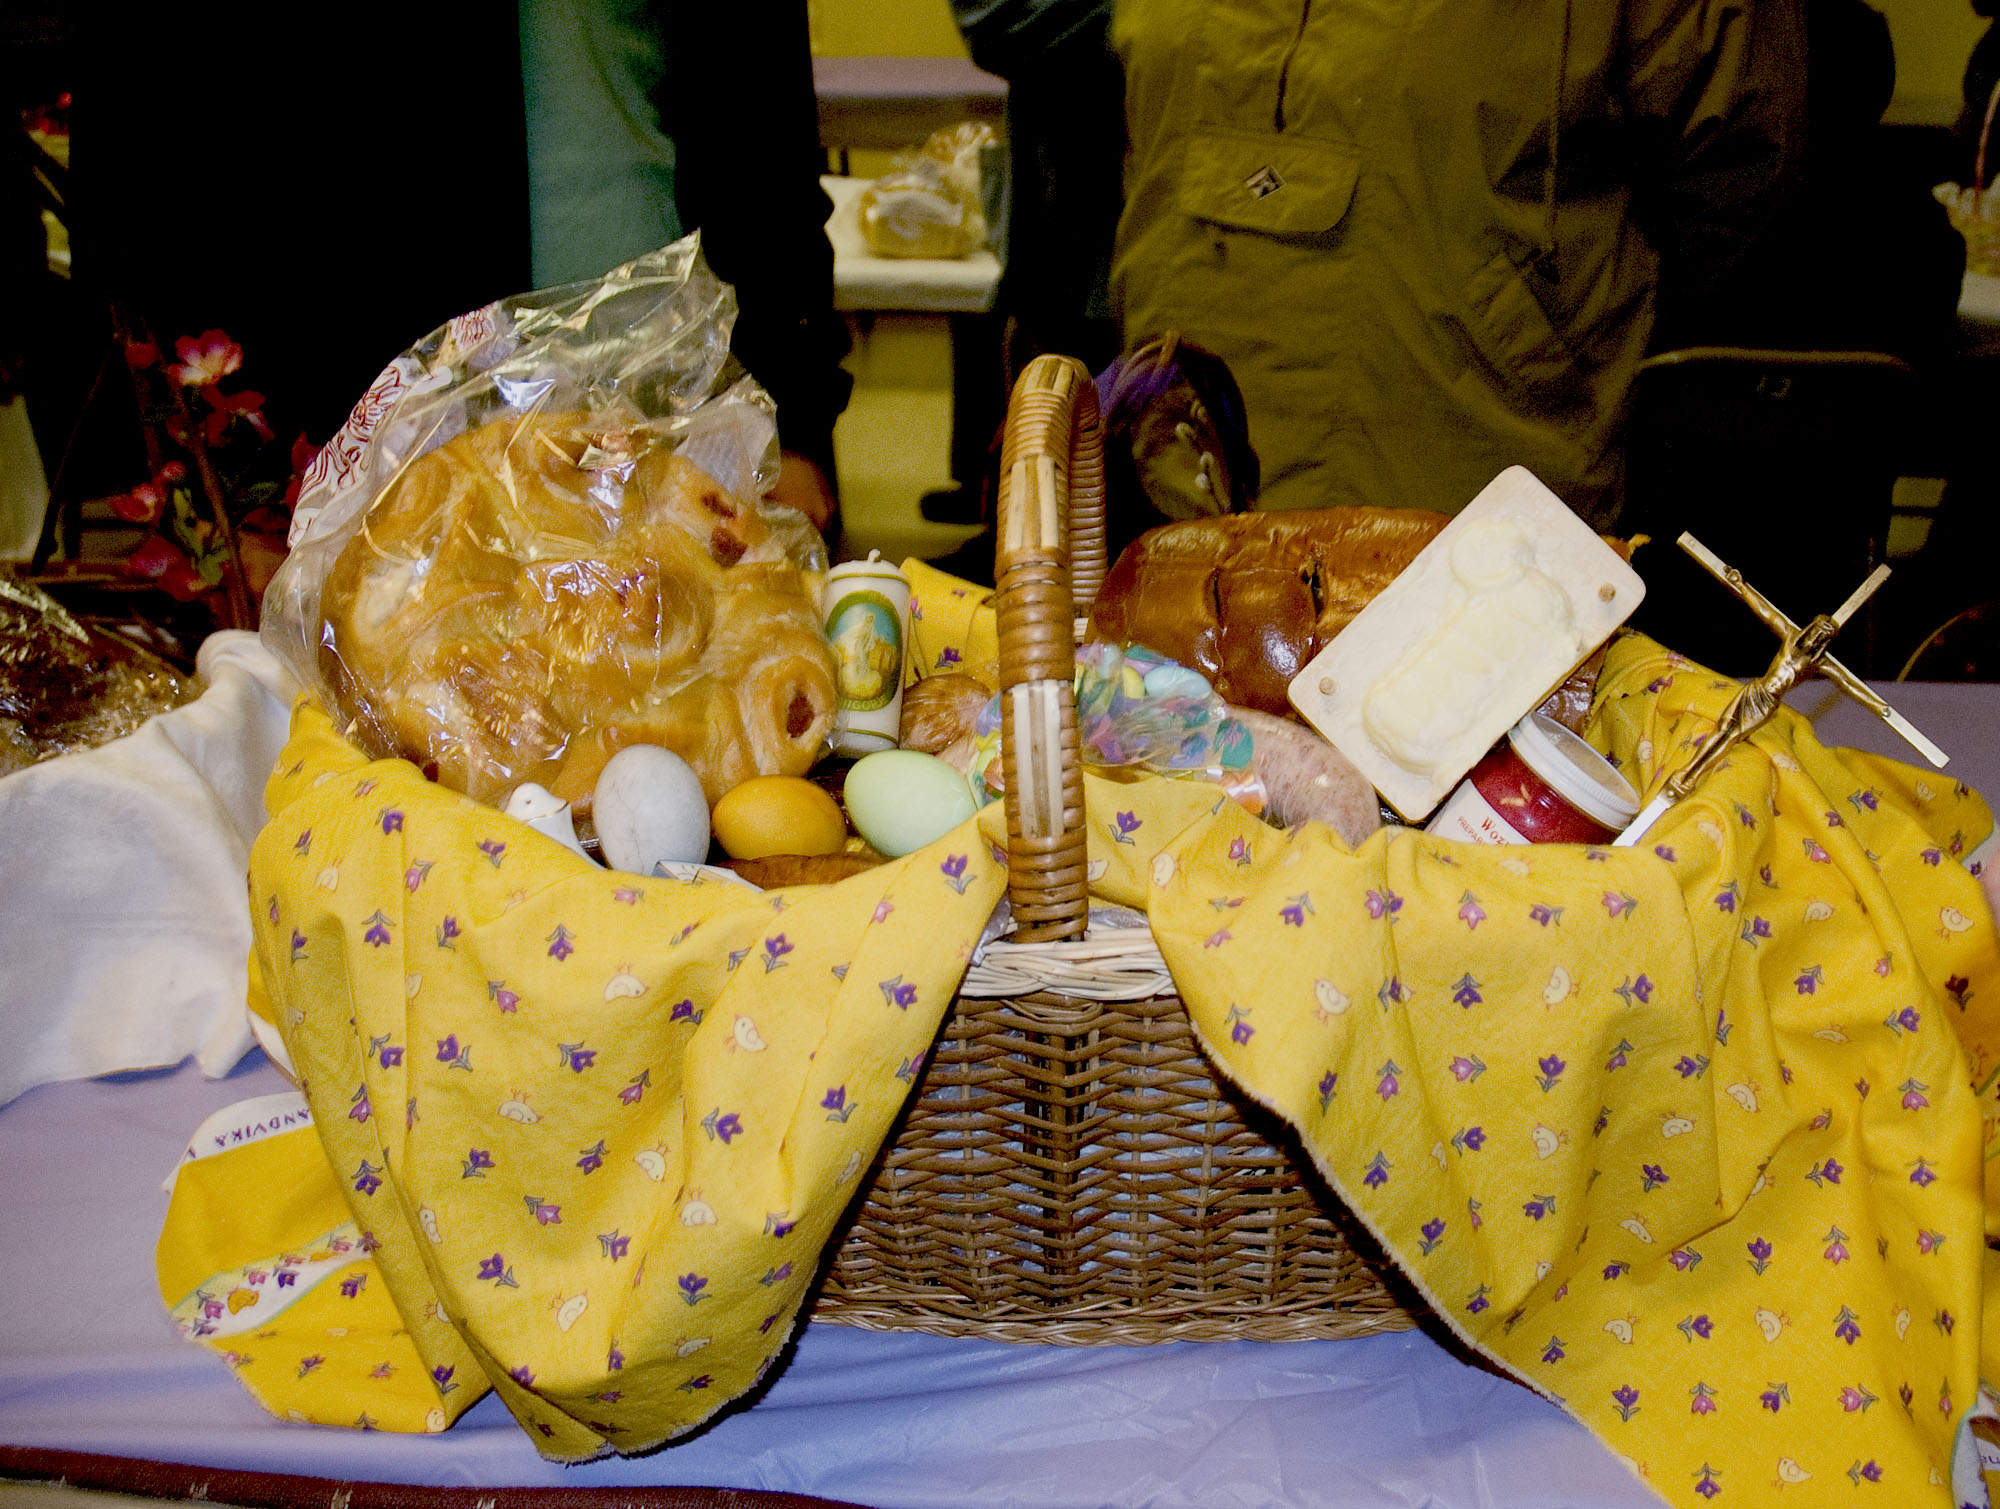 Wicker basket holding Easter foods.